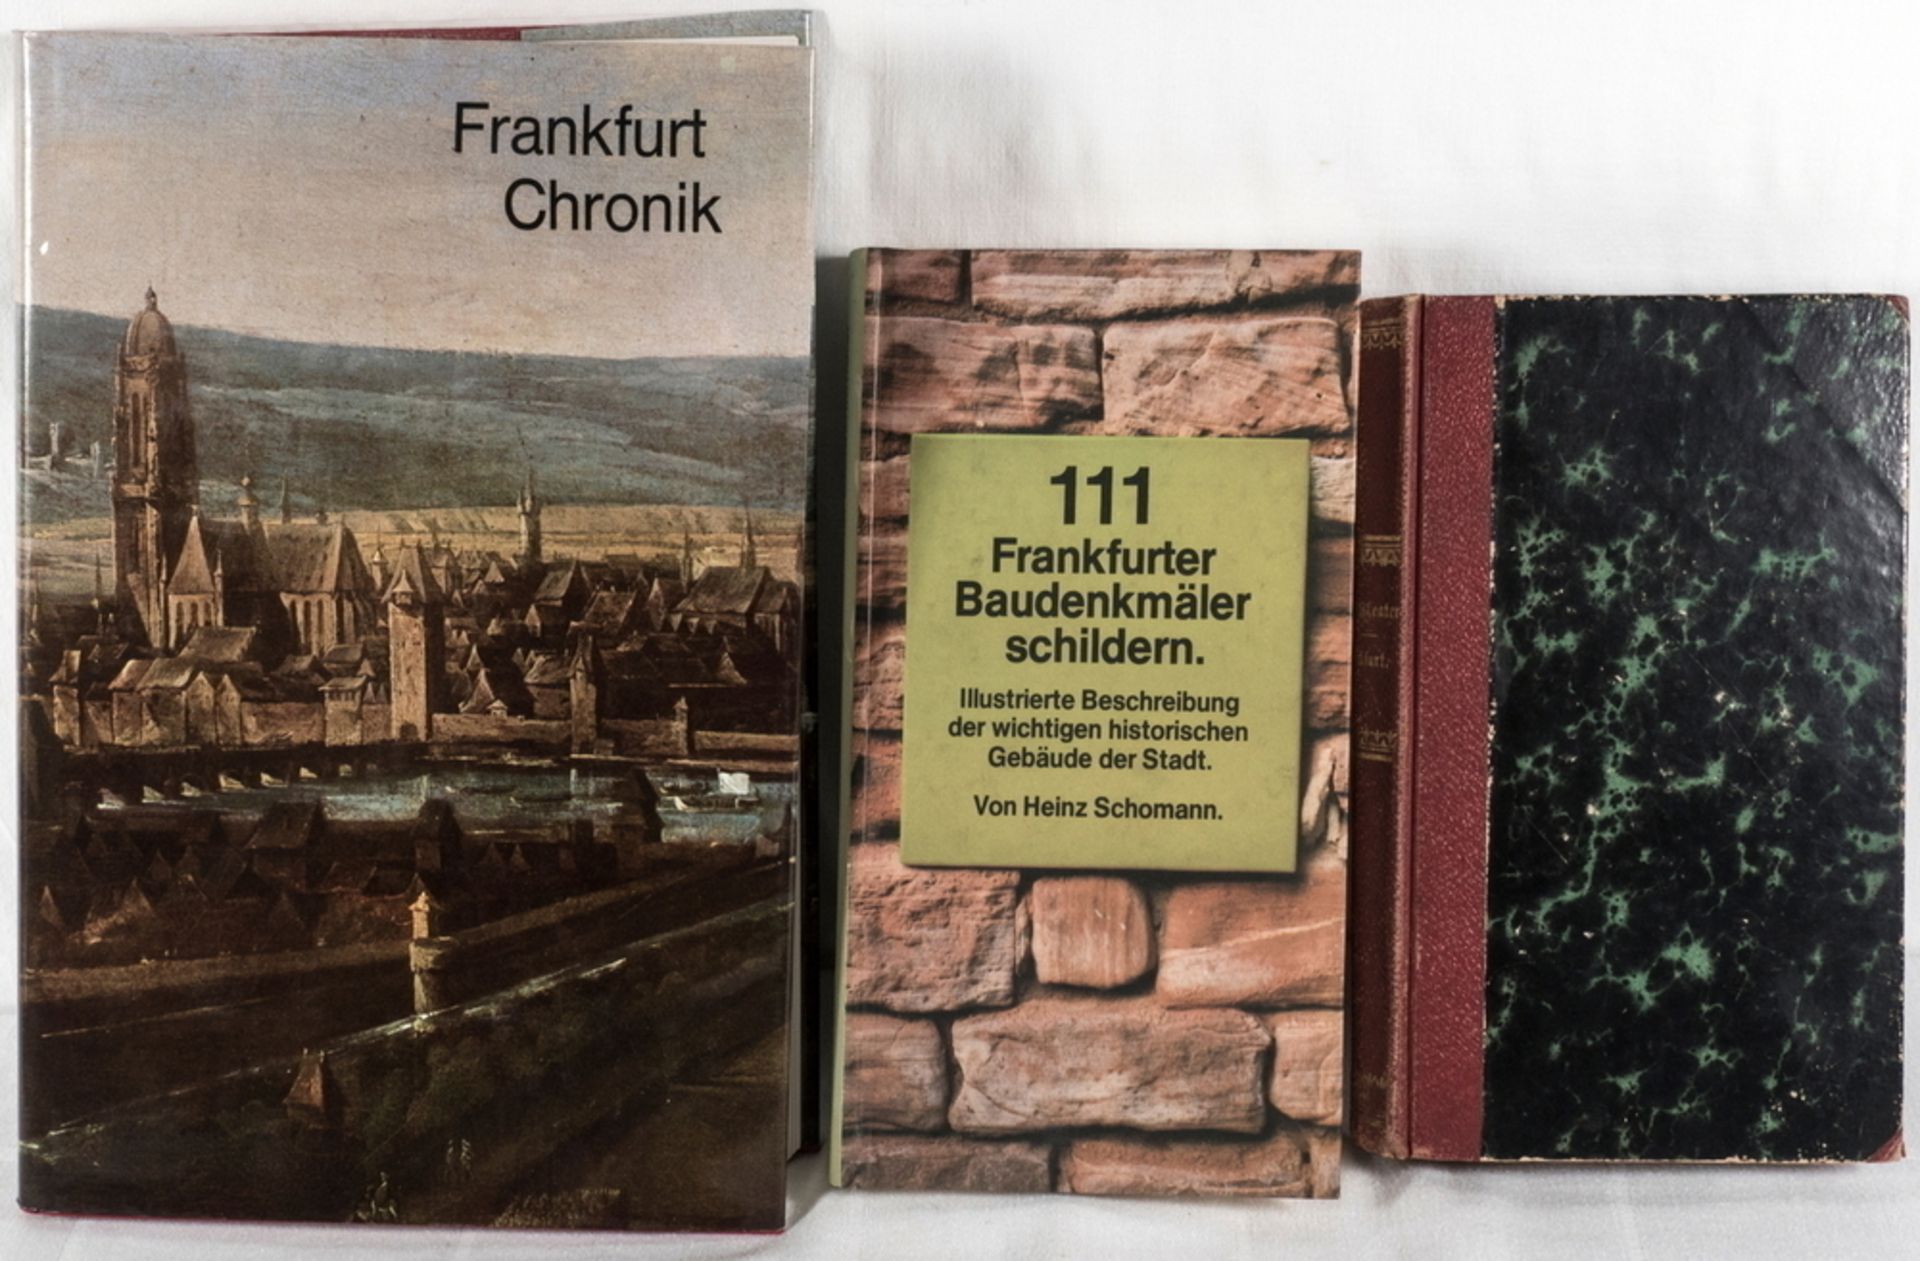 Lot Bücher Frankfurt am Main betreffend: 1. Waldemar Kramer, "Frankfurter Chronik", Heinz